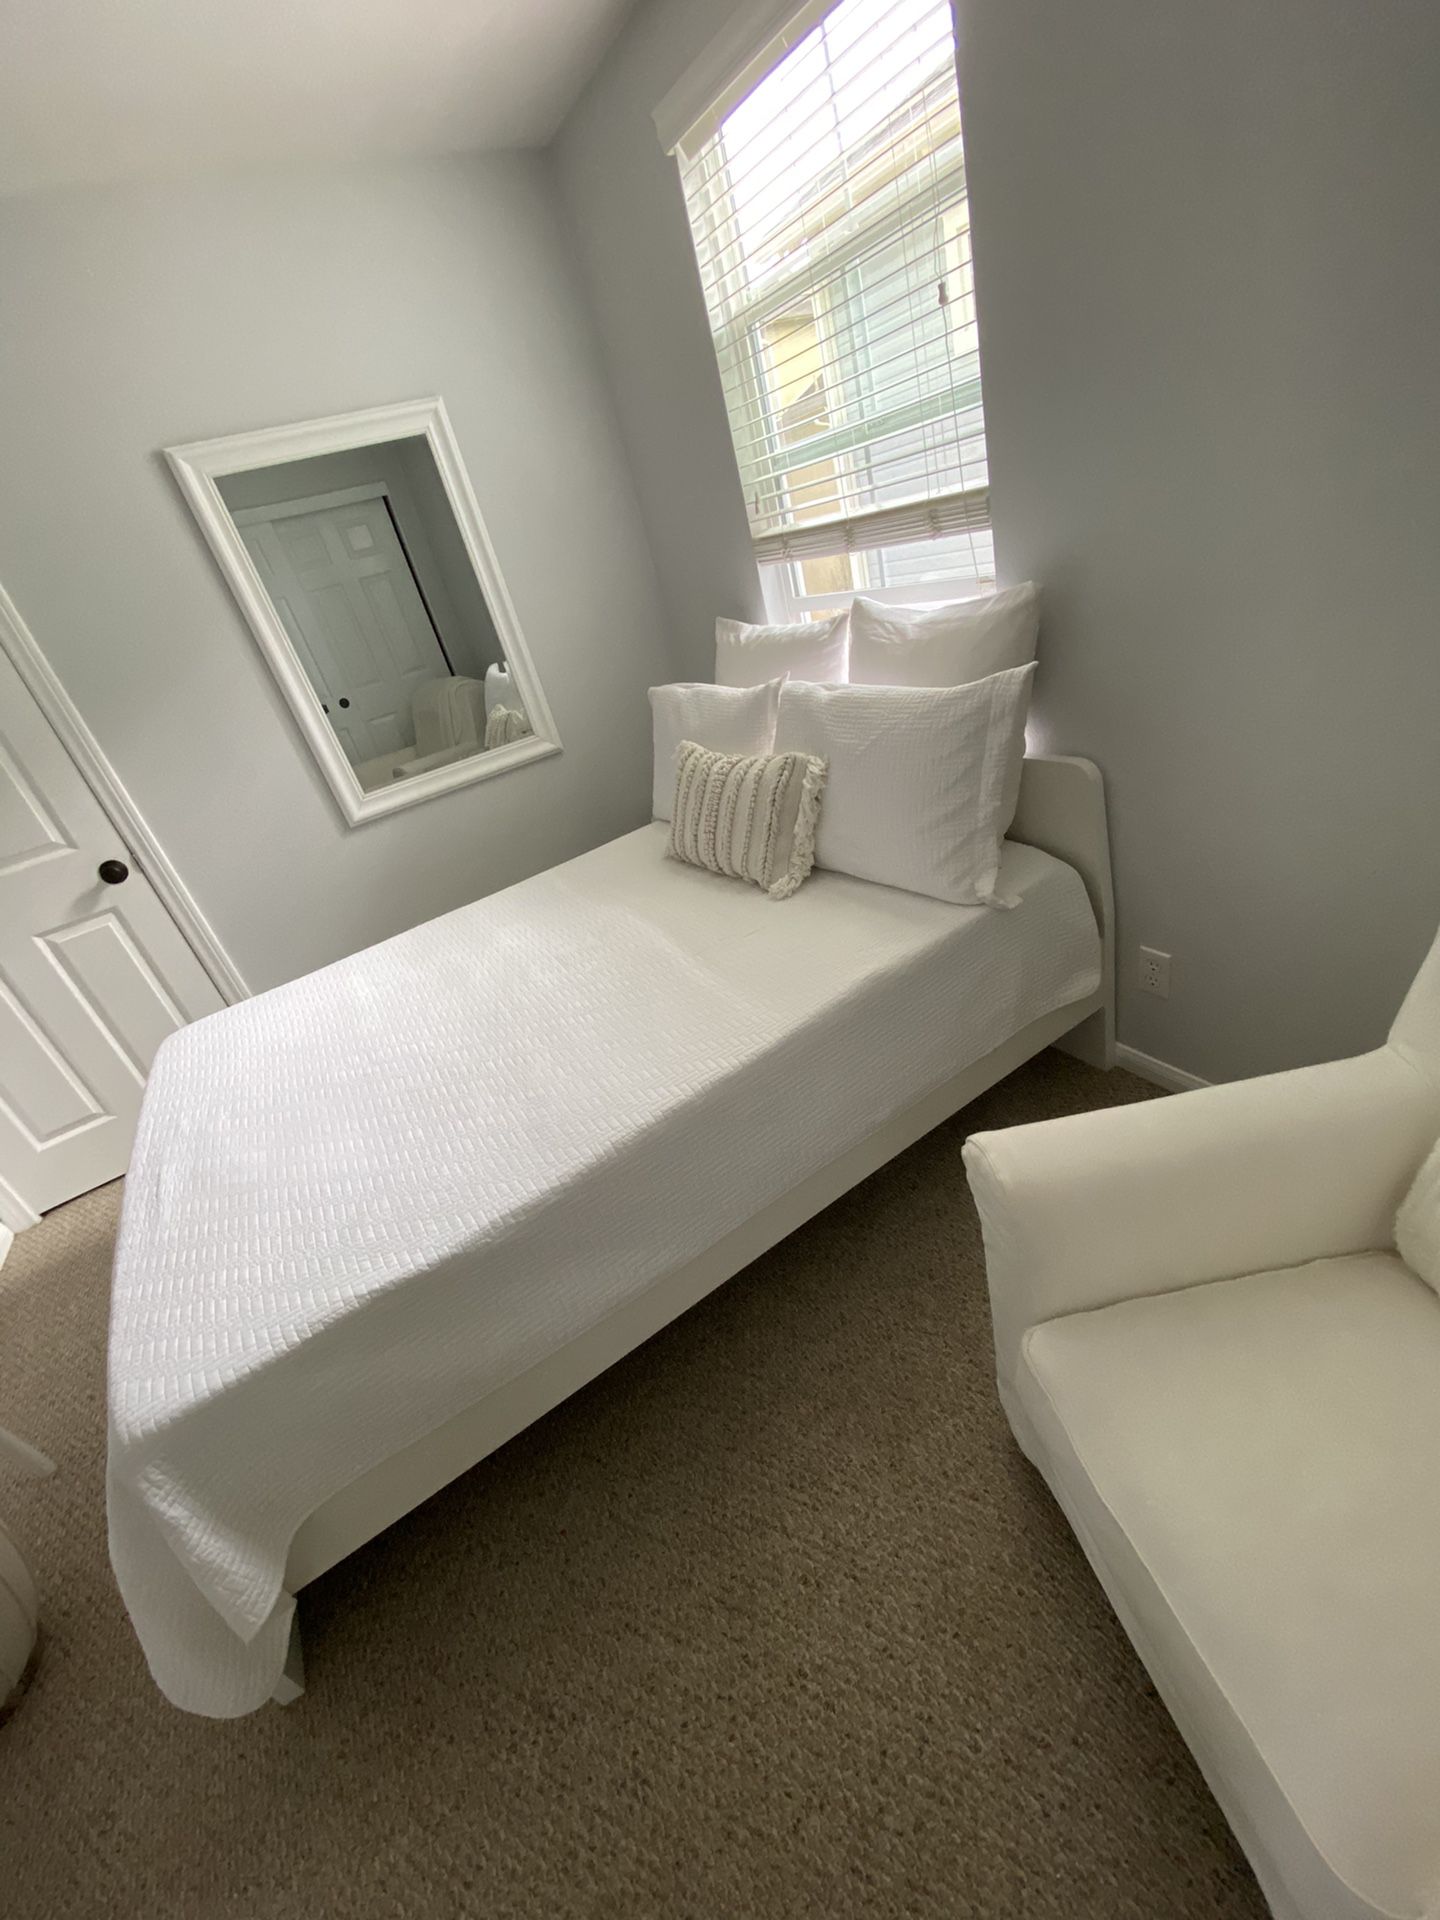 BRIGHT white full bed frame, mattress and memory foam topper